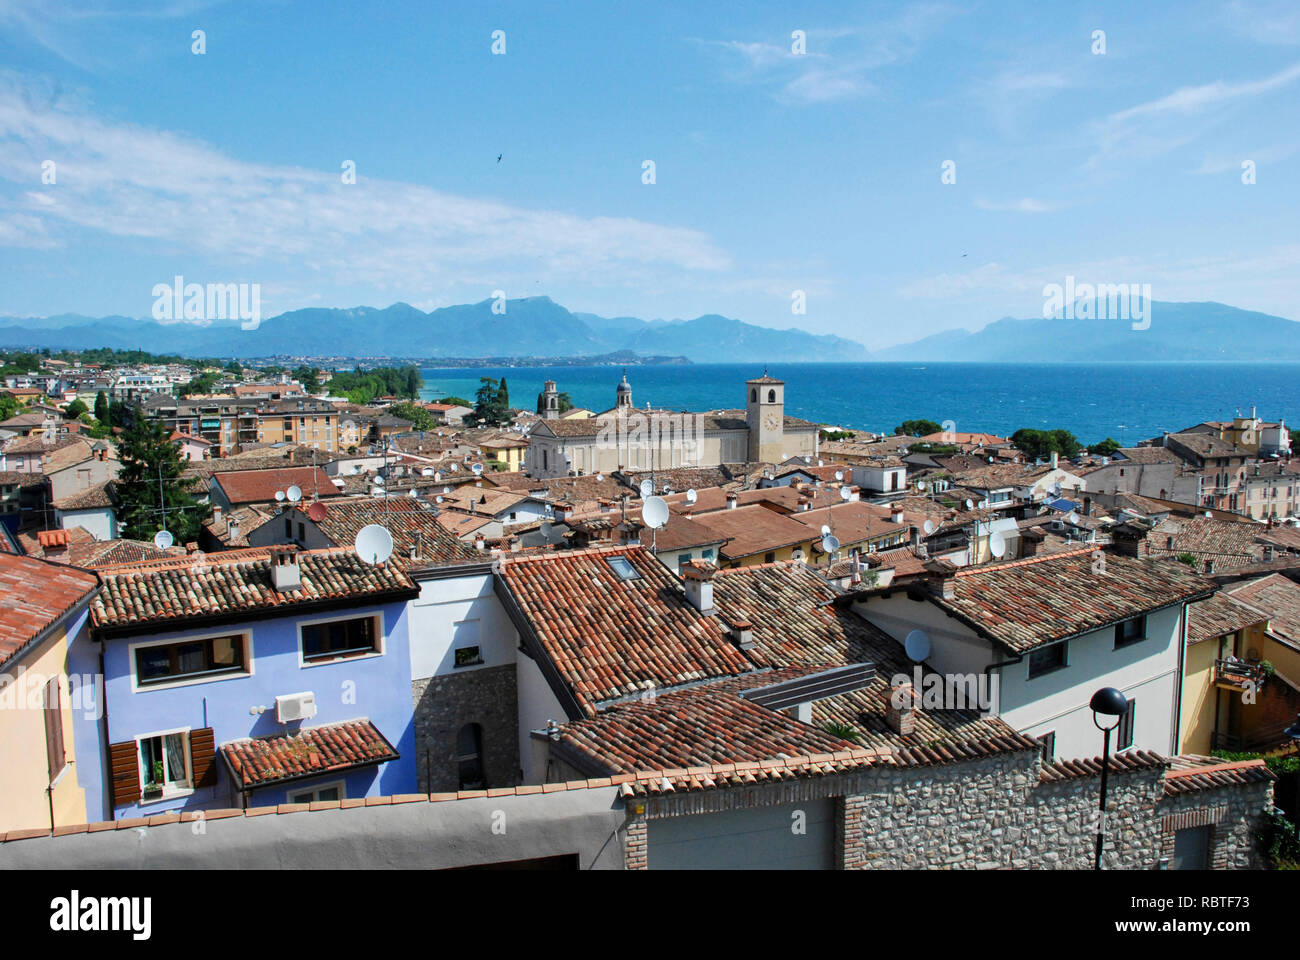 Desenzano del Garda, view of tiled roofs Stock Photo